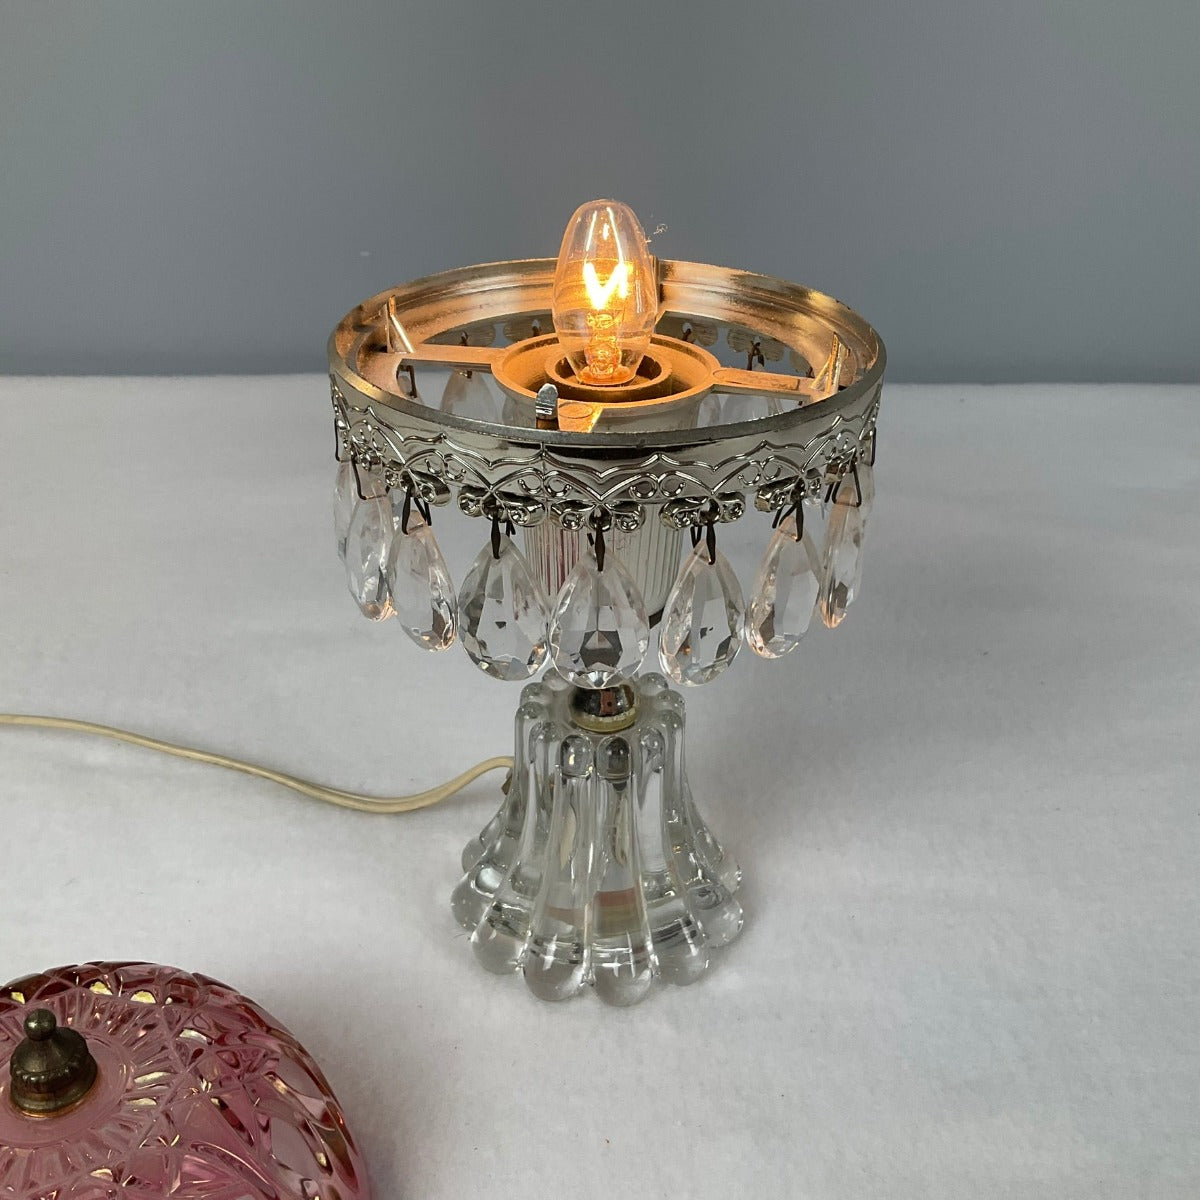 Michelotti Boudoir Lamp - Vintage Single Tier Pink Crystal Glass - Bulb